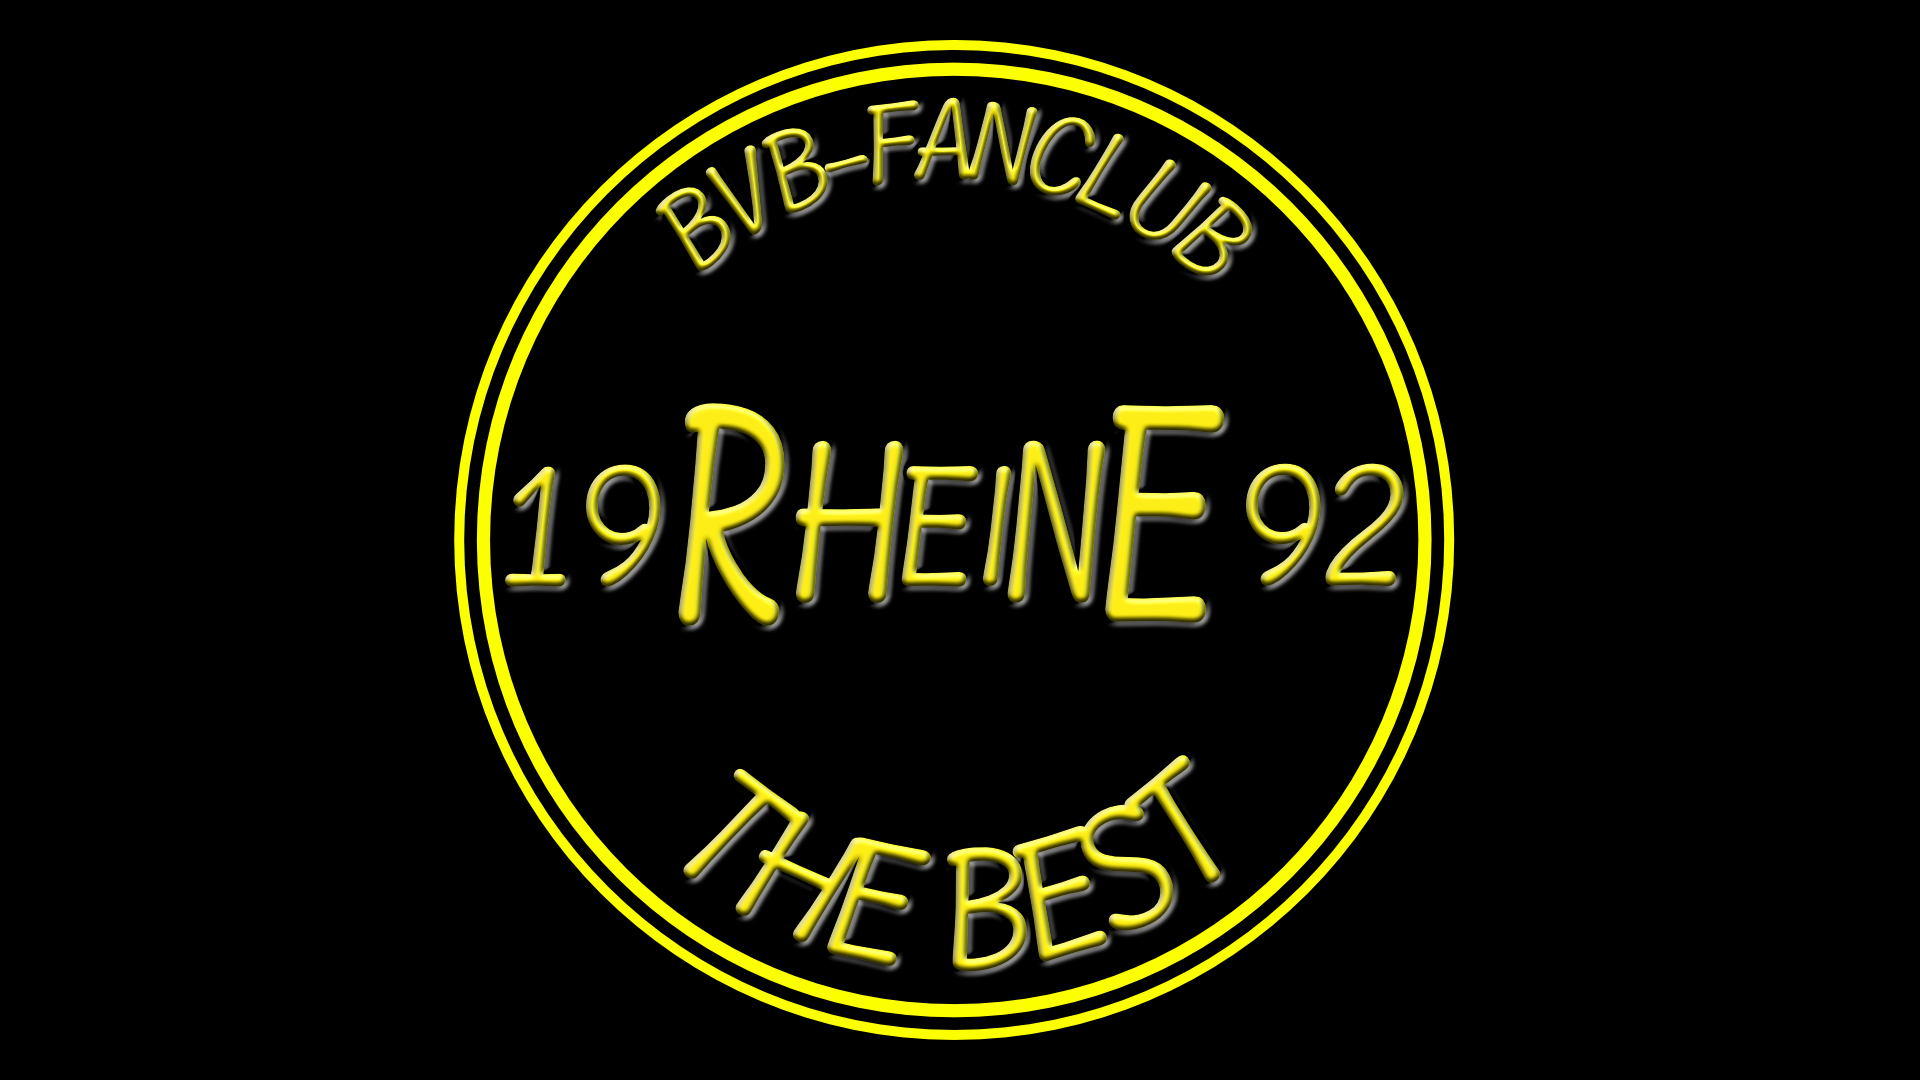 BVB Fanclub Rheine